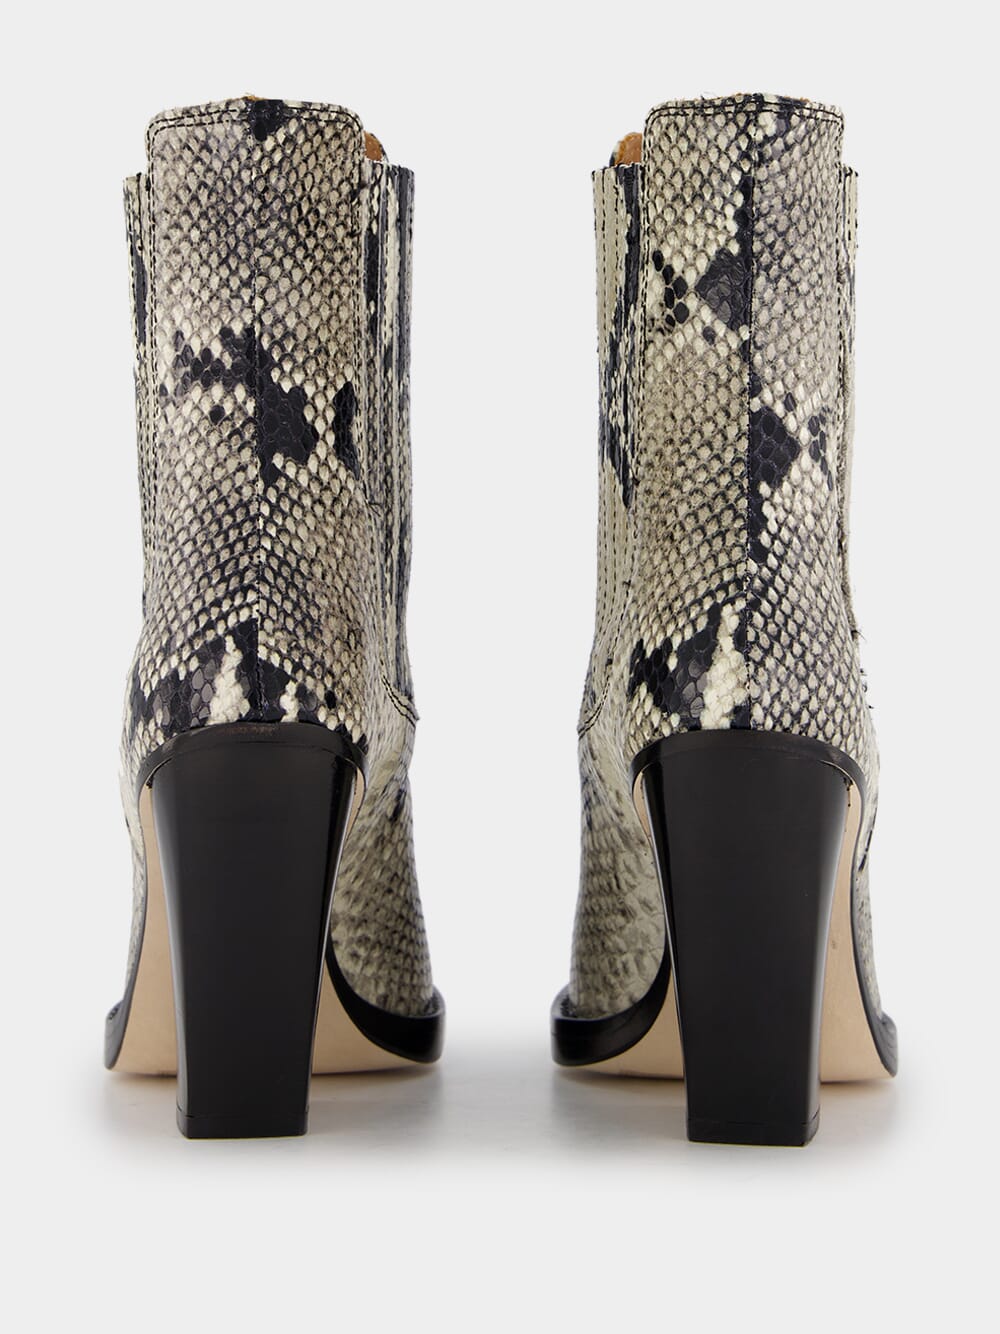 Paris TexasDallas Ankle Python-Print Boot at Fashion Clinic